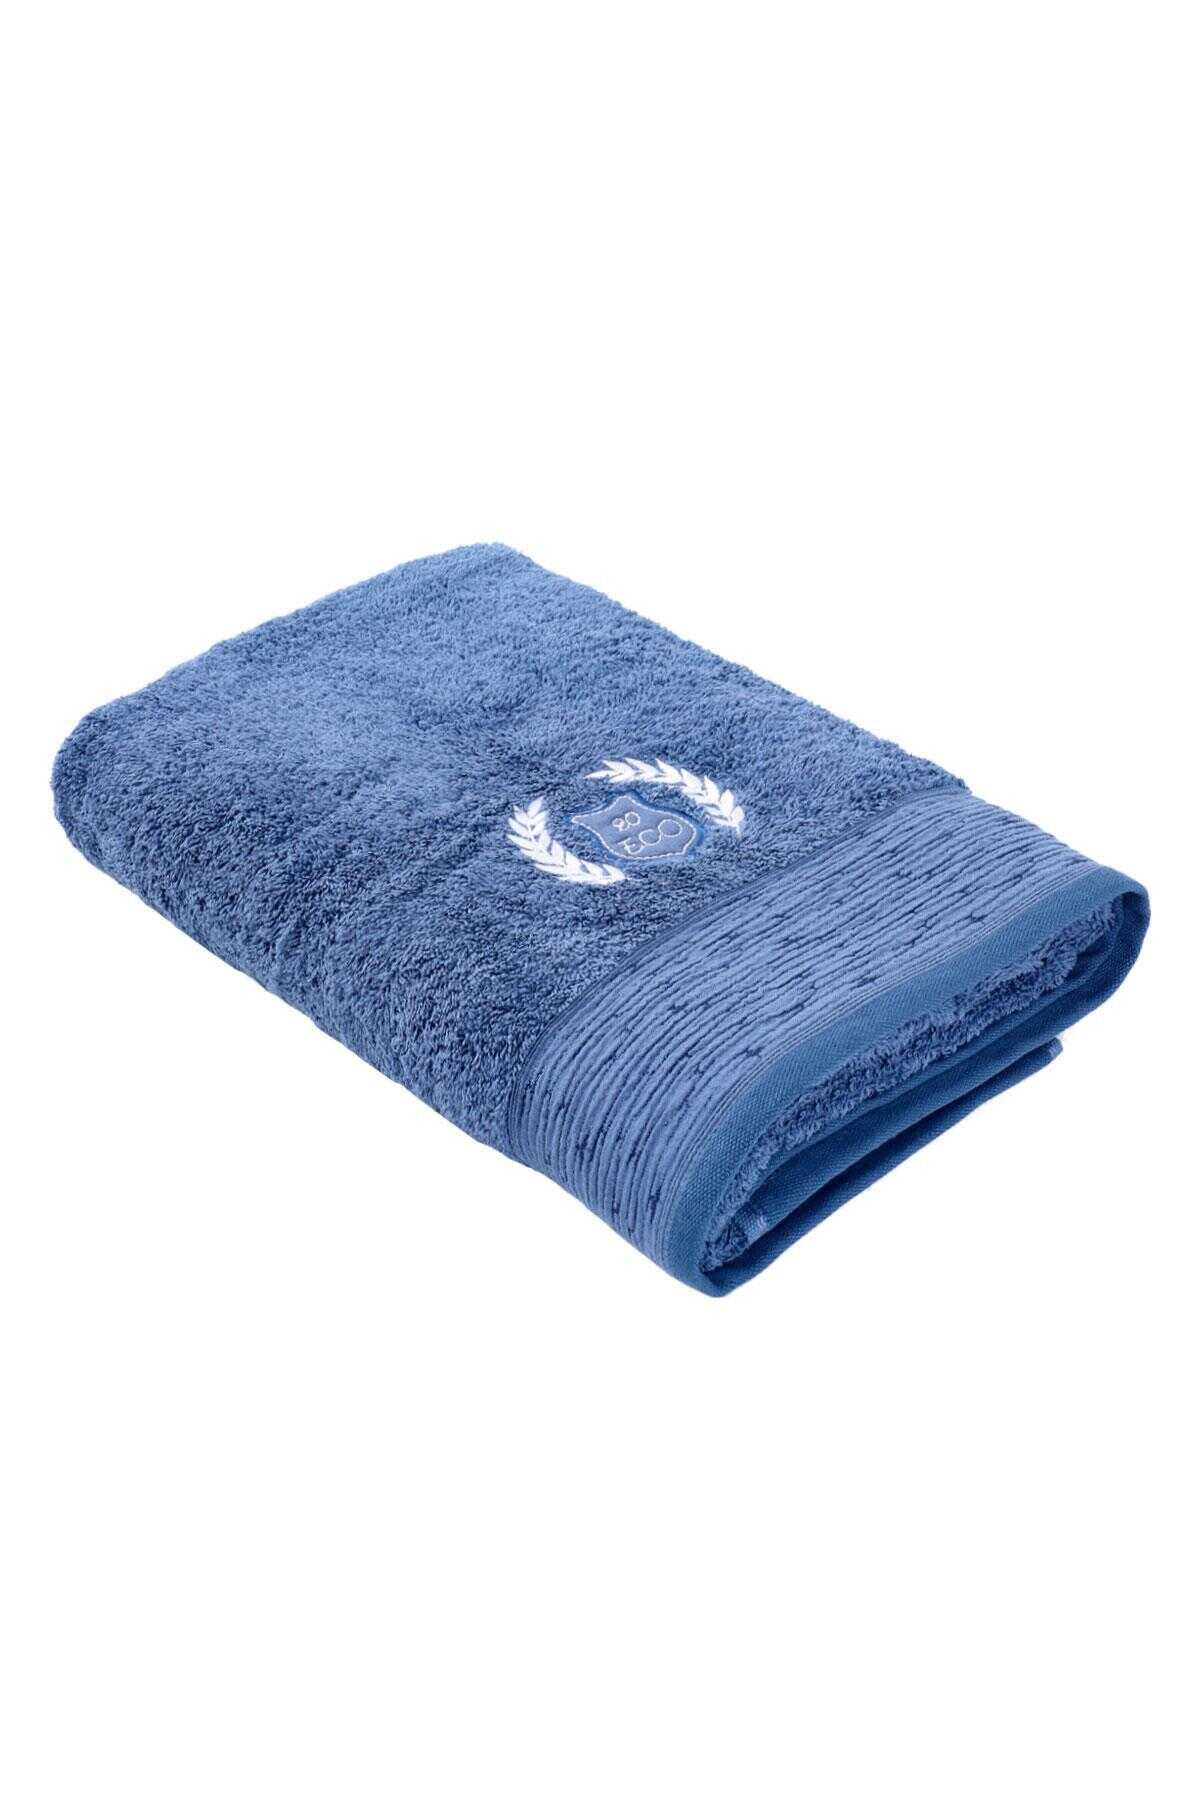 Ecocotton Derin Organic Cotton Embroidered Men's Bath Towel 80x150 cm